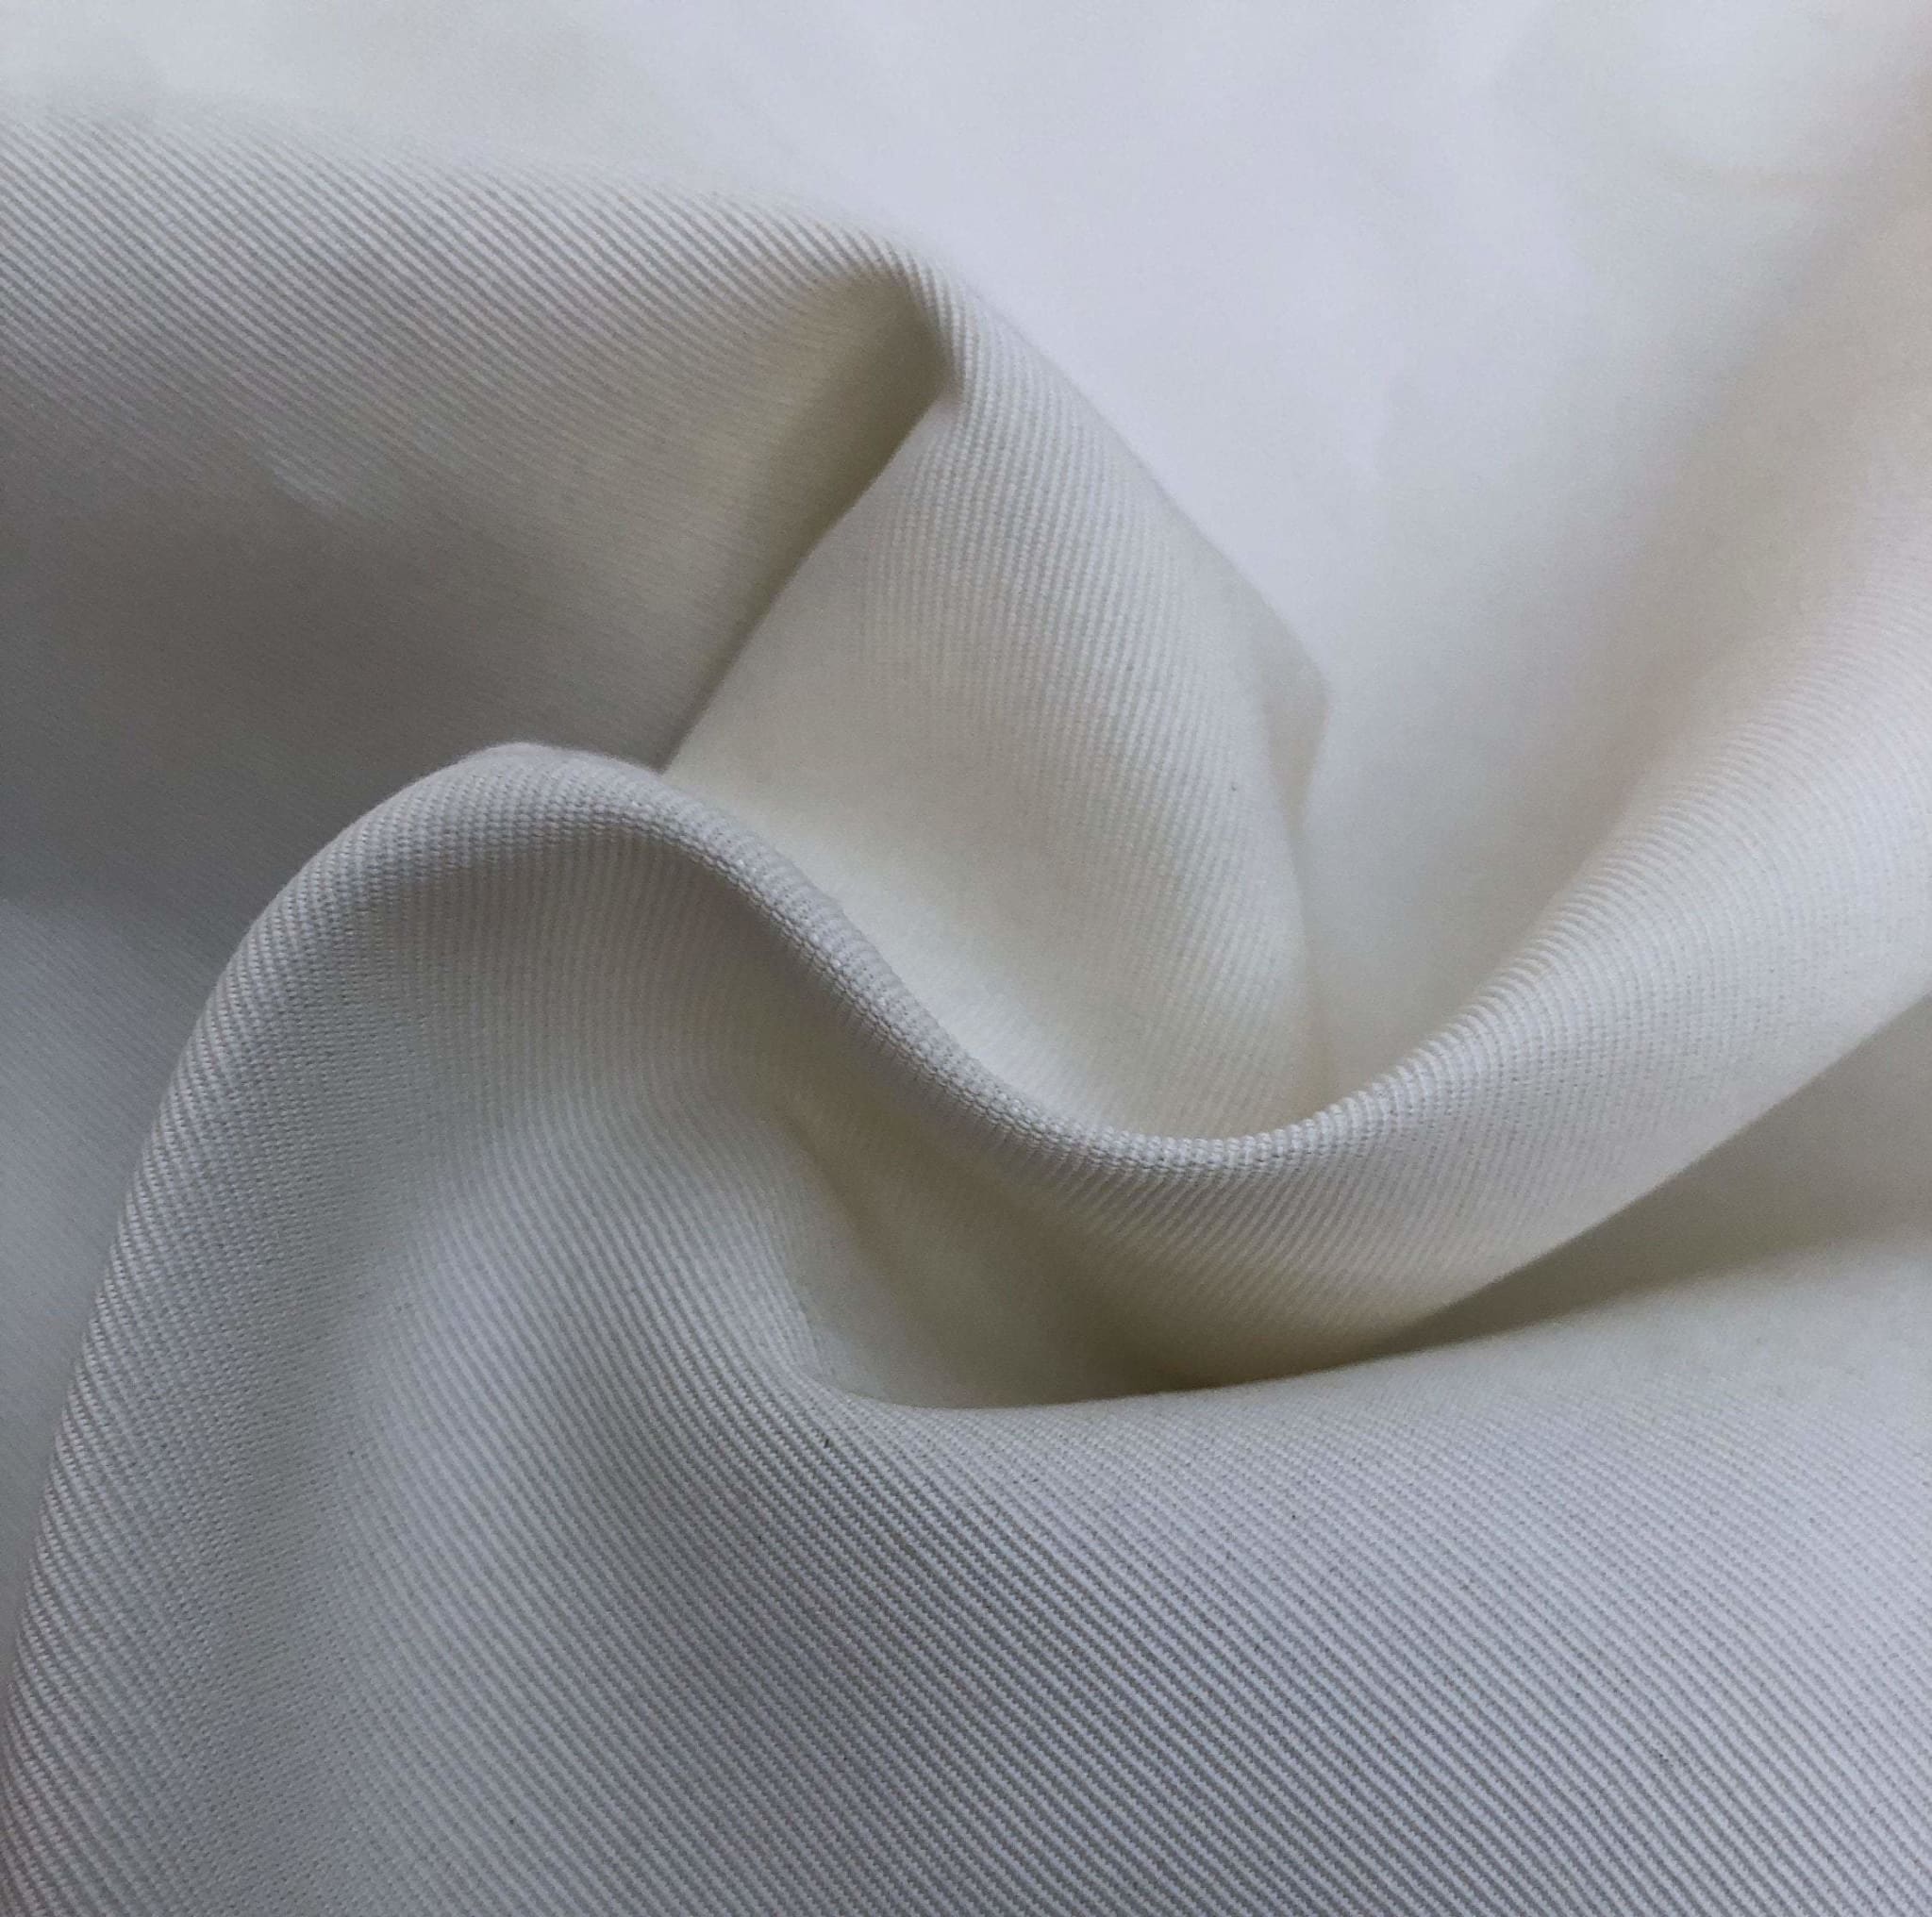 White Polyester Fabric White Fabric Yardage Fabric by the Yard 58/60 